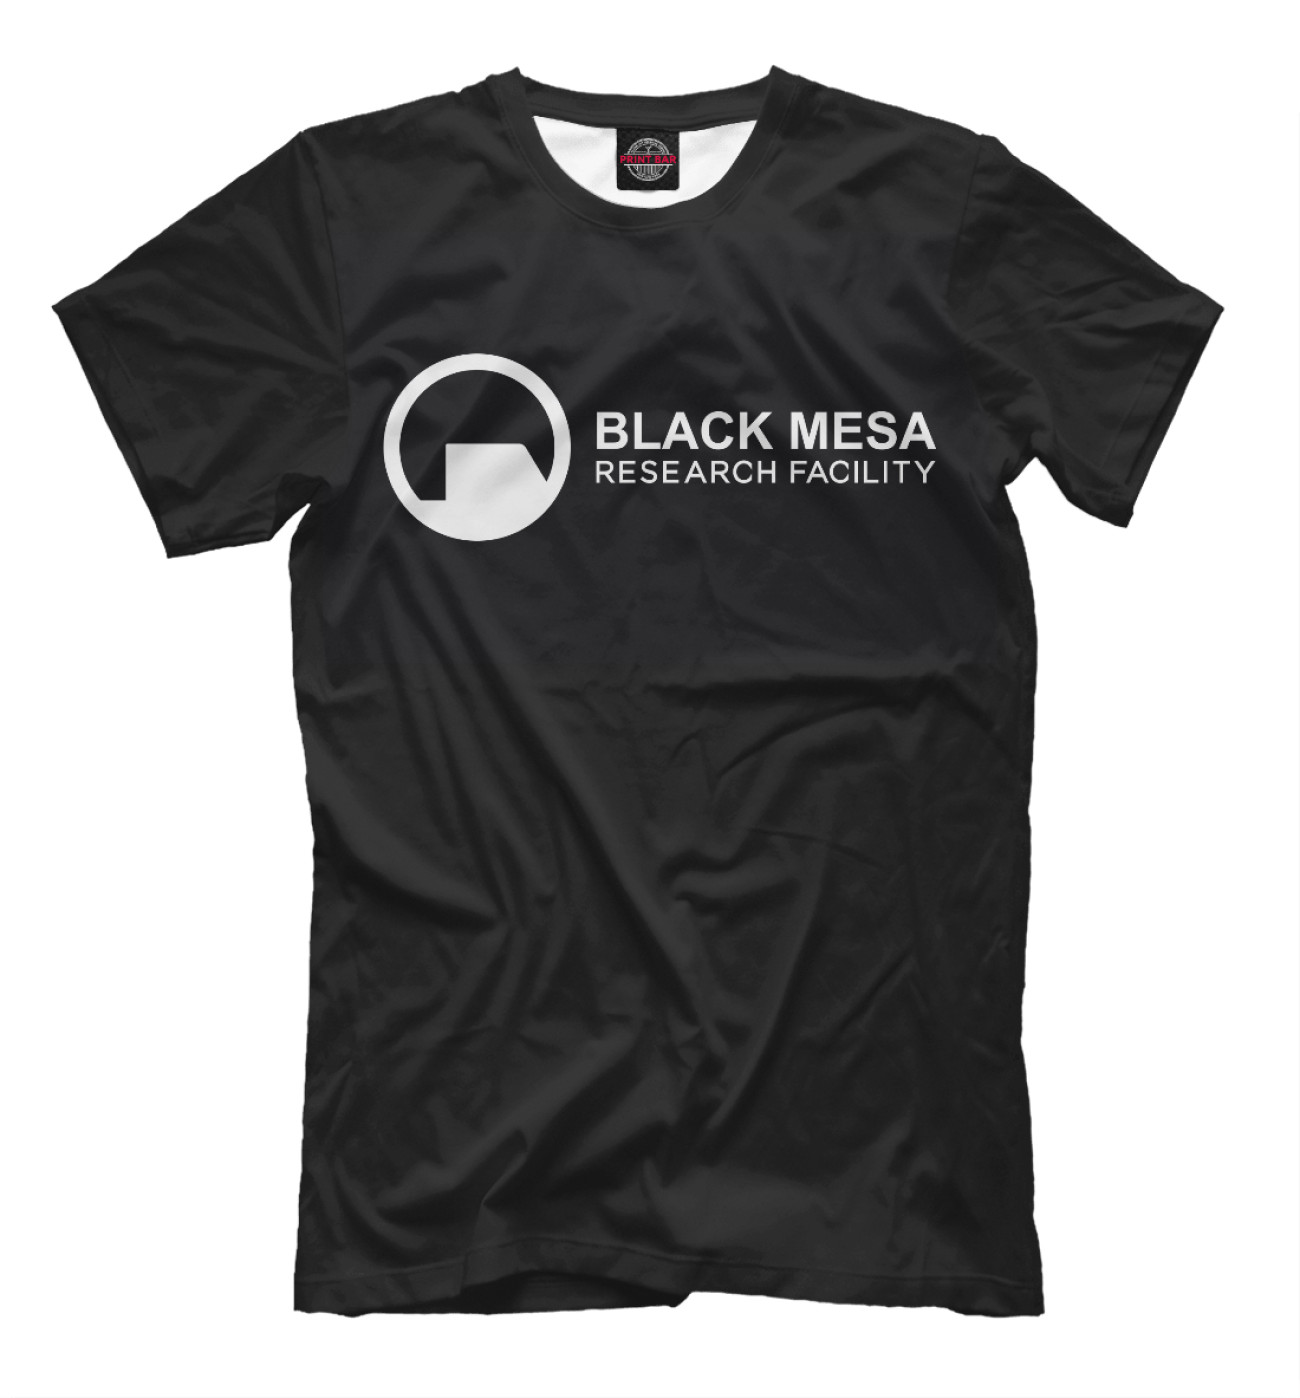 Мужская Футболка Сотрудник Black Mesa, артикул: HLF-569593-fut-2